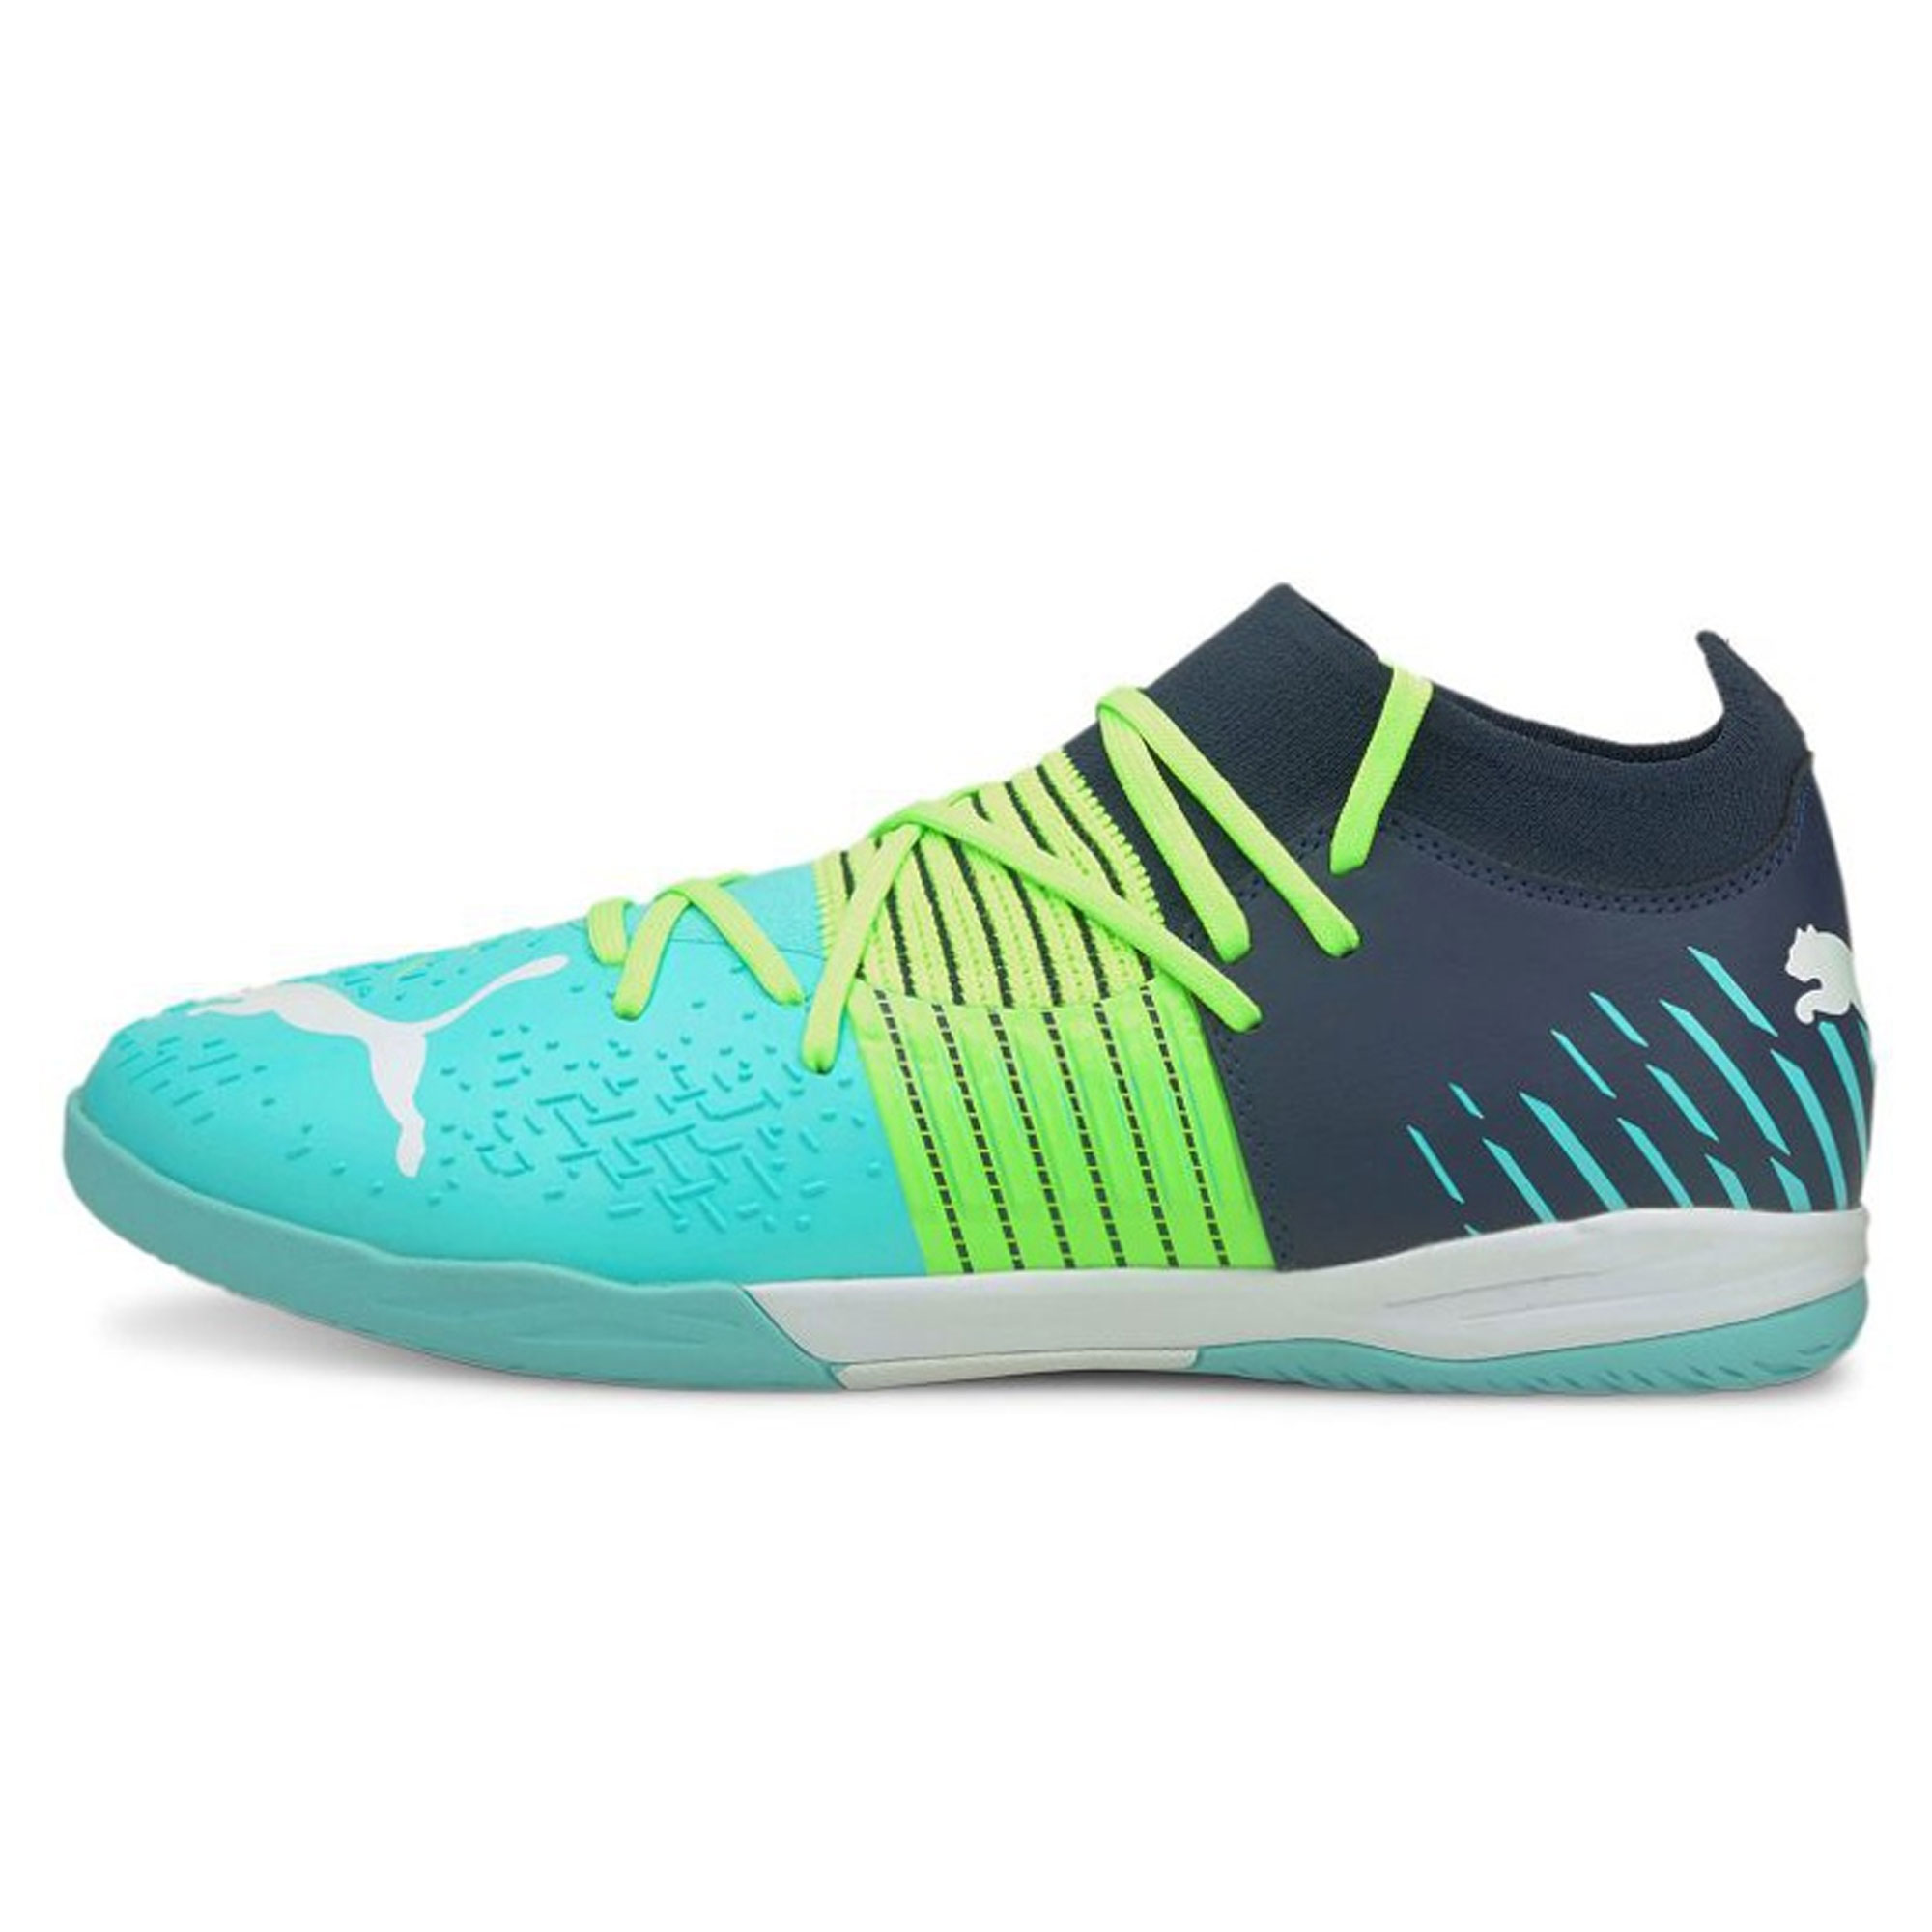 Puma Future Z 3.2 Indoor Soccer Shoes - Green Glare / Elektro Aqua